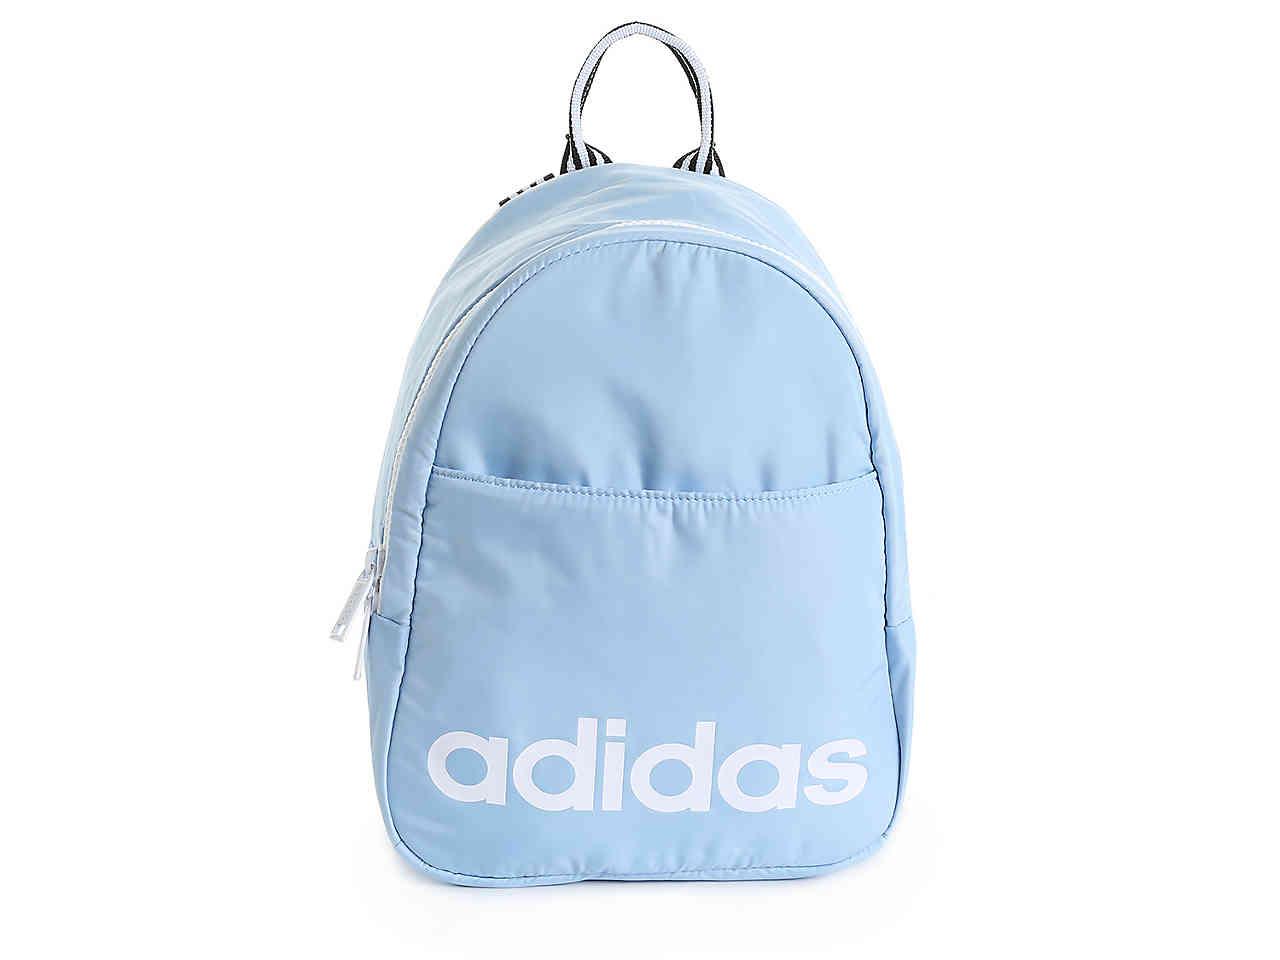 Adidas Mini Backpack Blue Dubai, SAVE 55% - stmichaelgirard.com